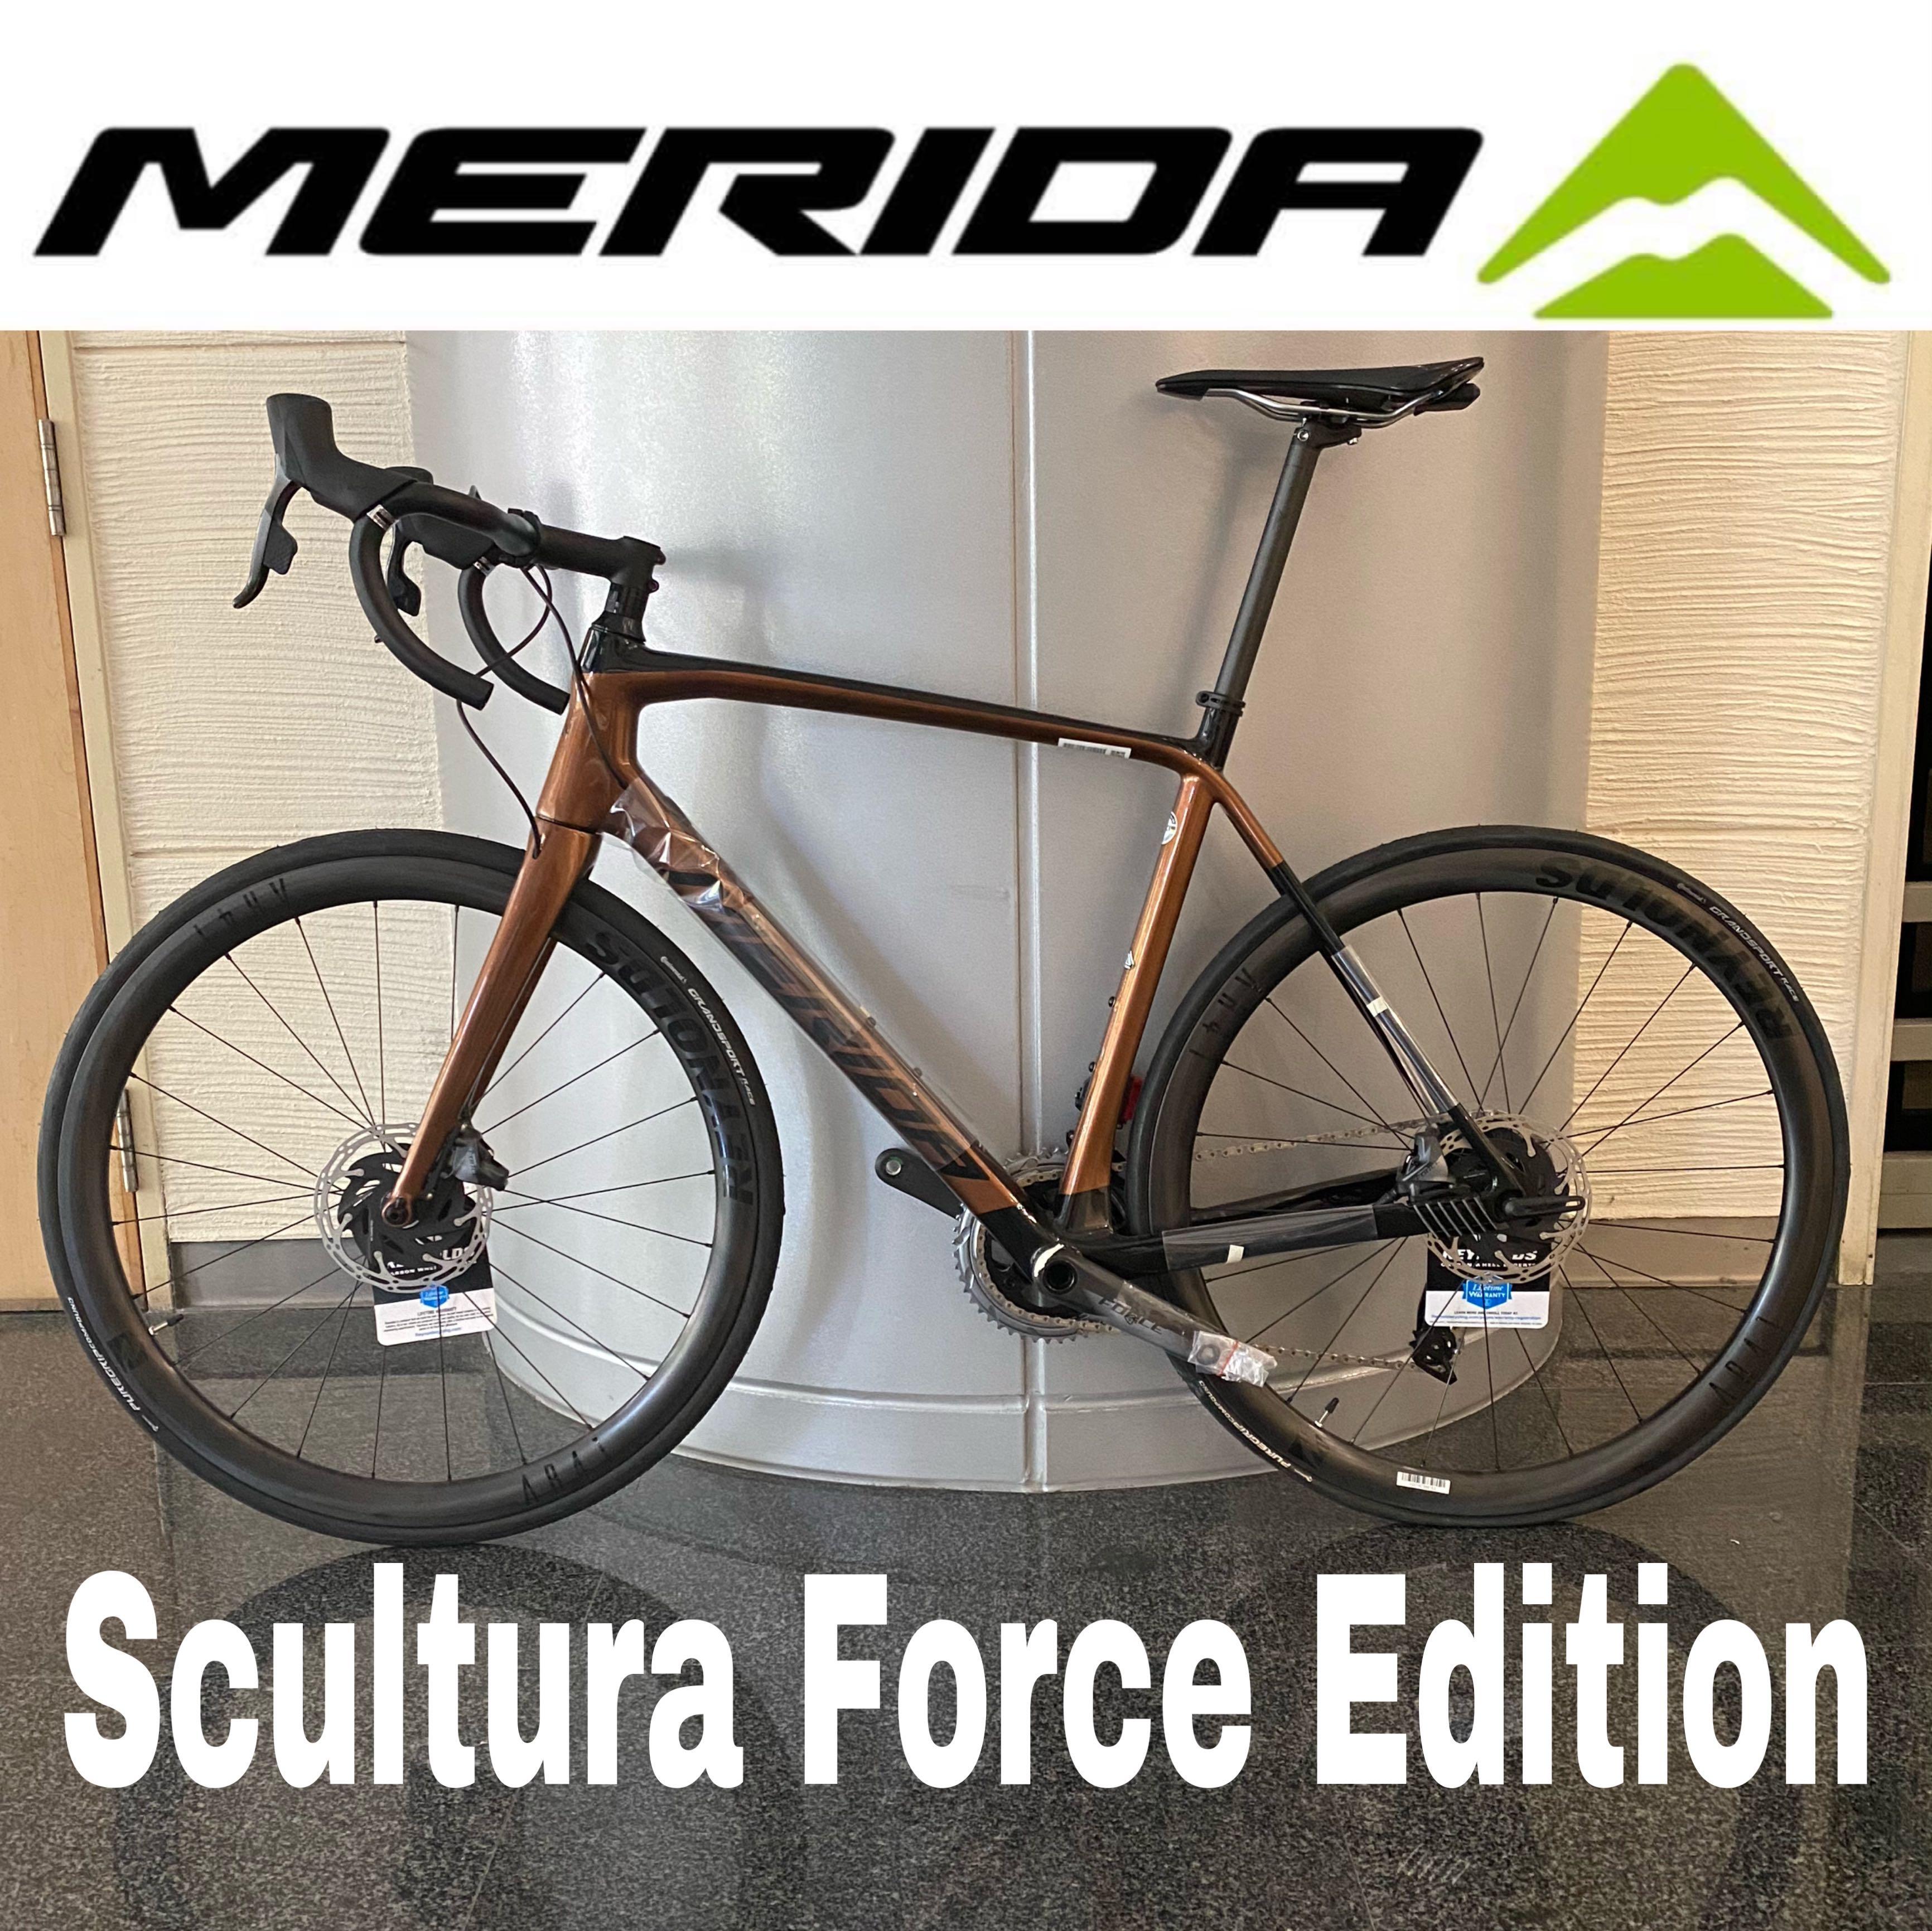 merida scultura force edition